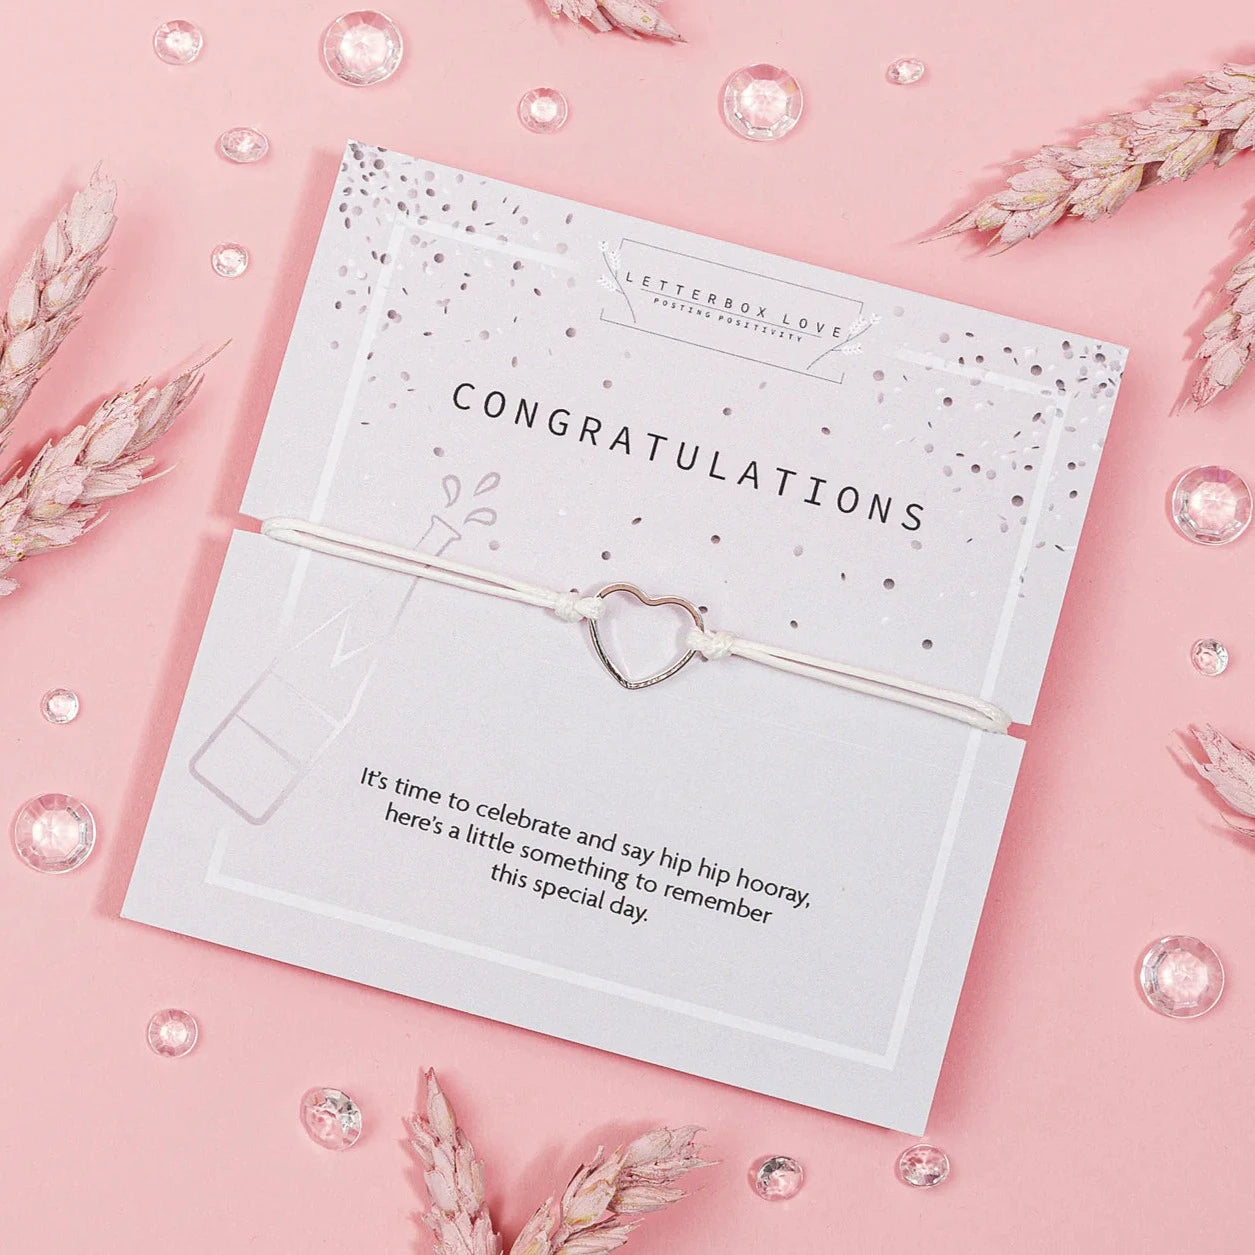 "Congratulations" Keepsake Bracelet and Card Set